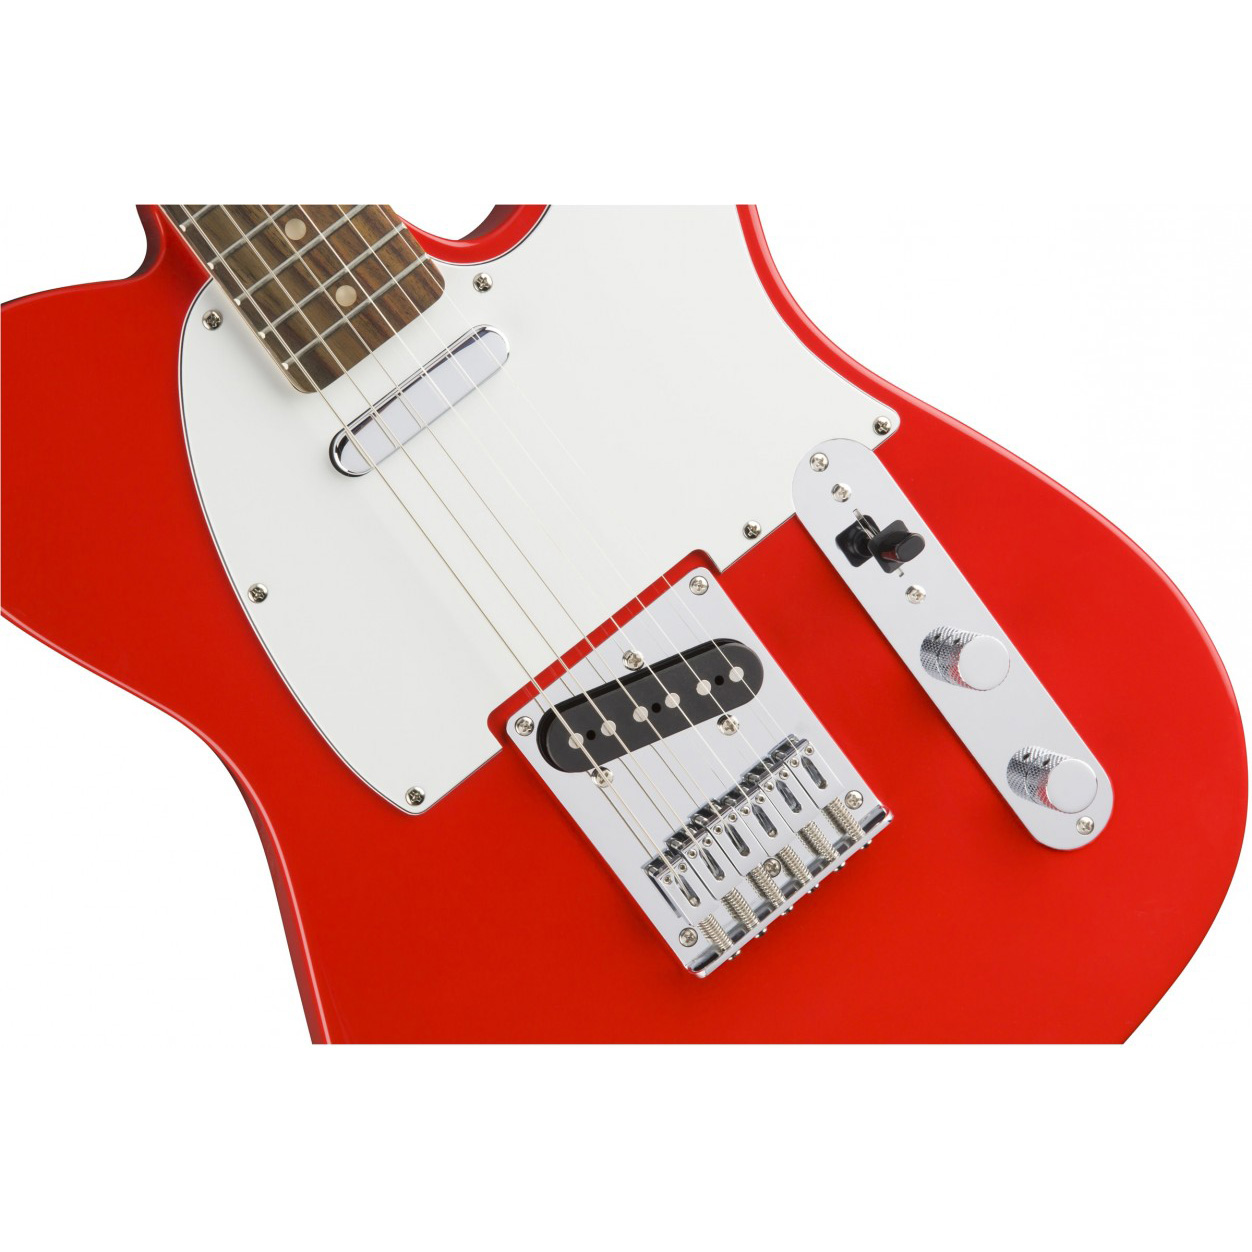 Fender Squier Affinity Tele RCR Электрогитары